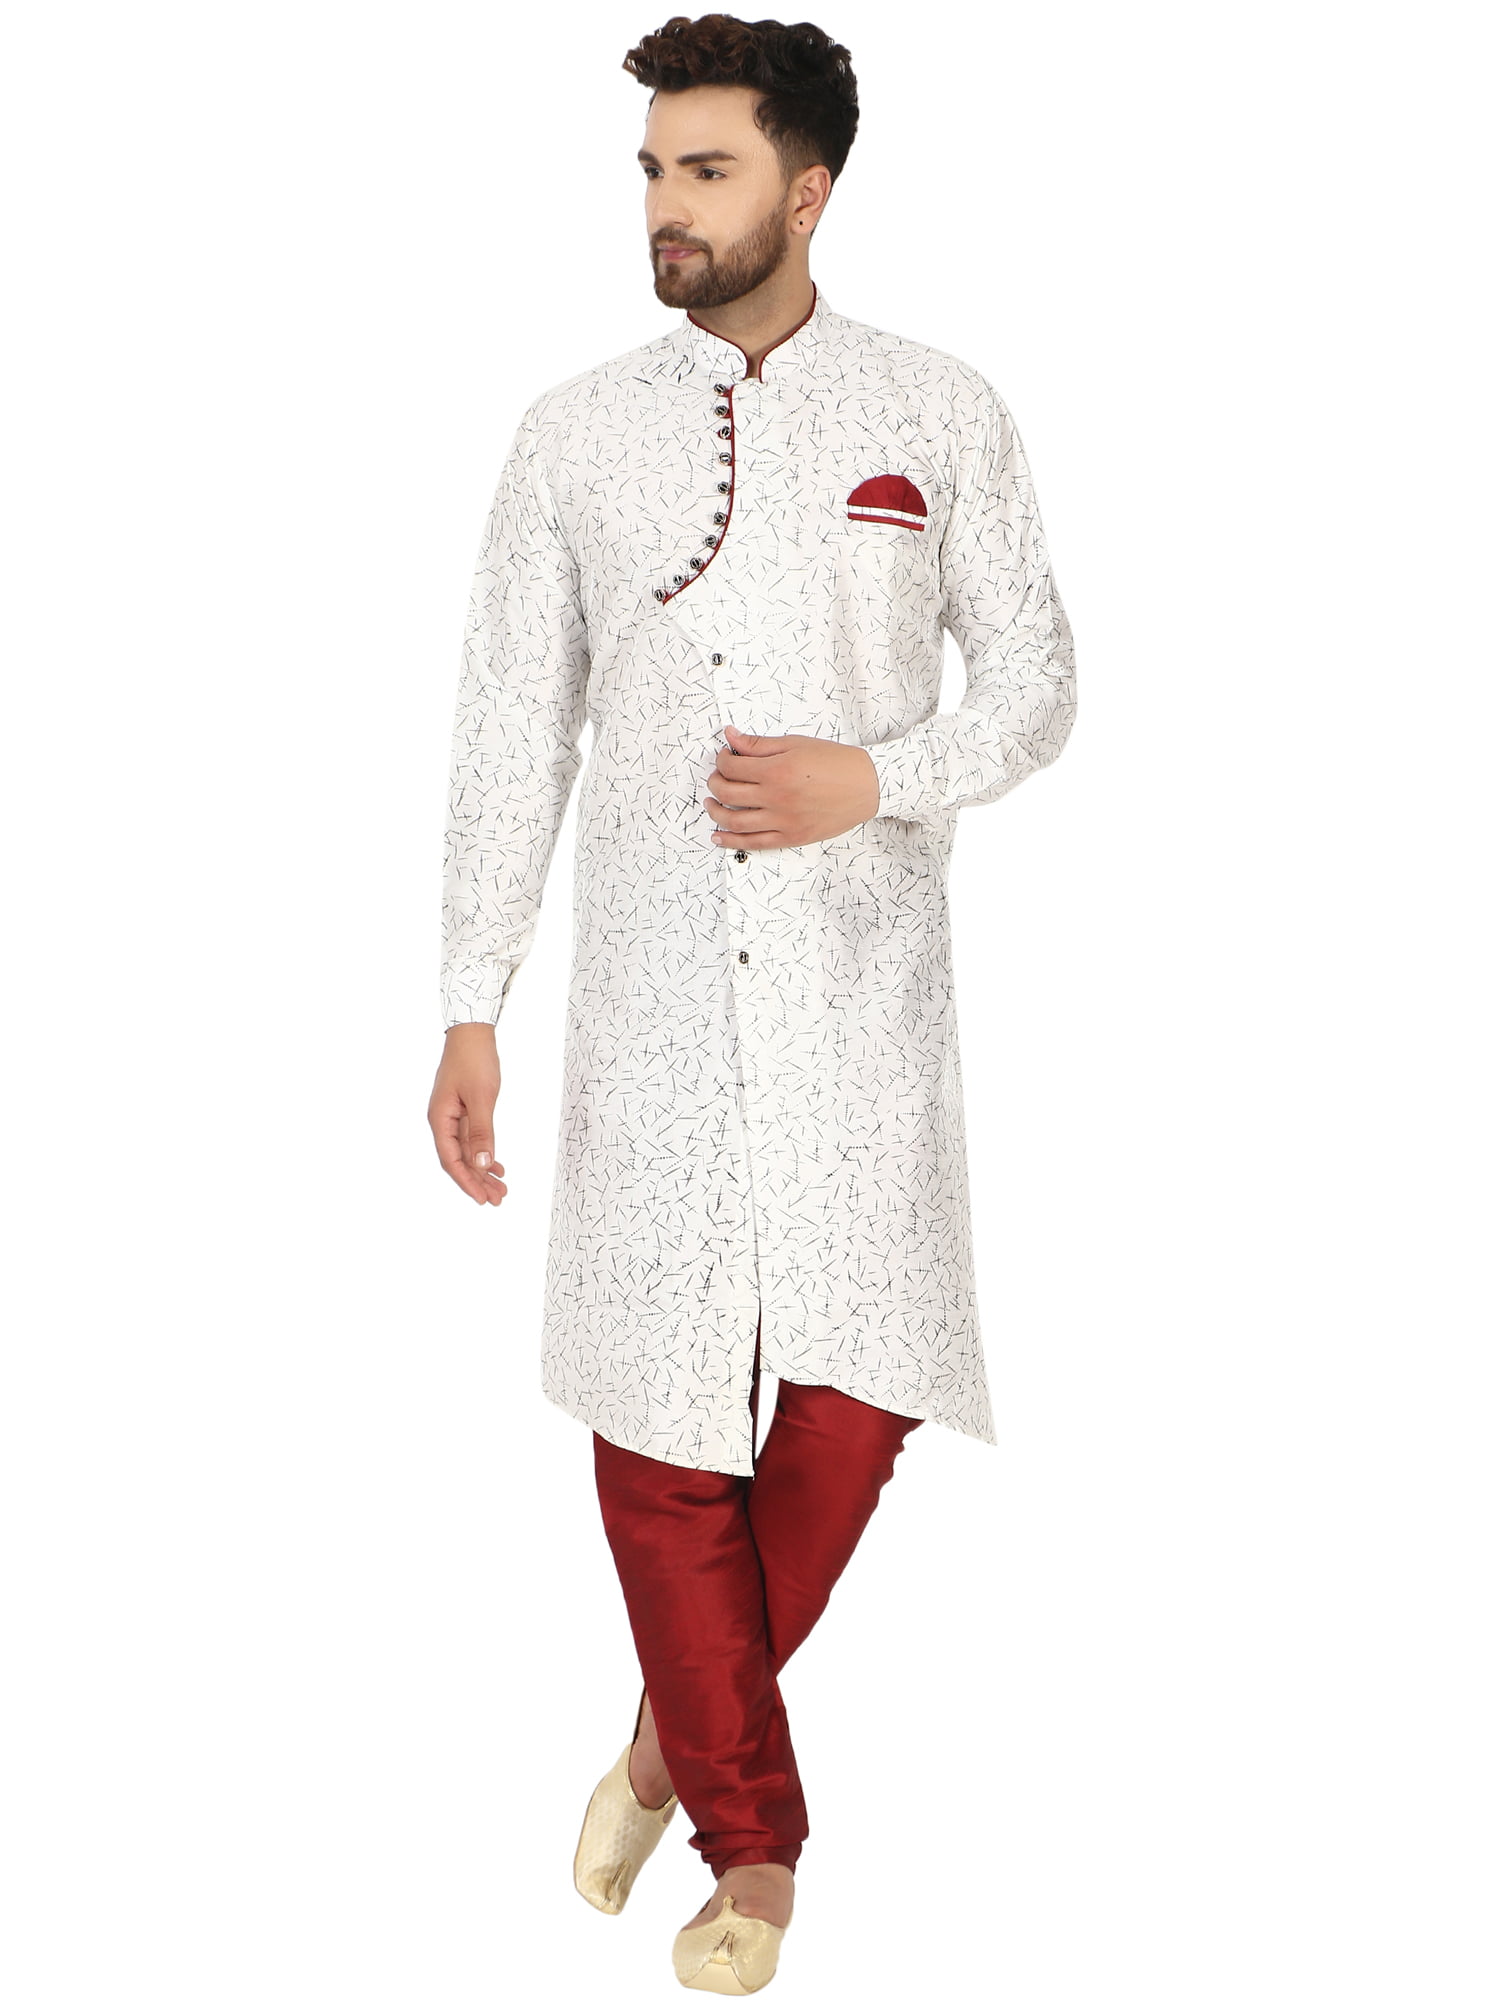 SKAVIJ Kurta Pajama Set for Men Traditional Wedding Party Dress